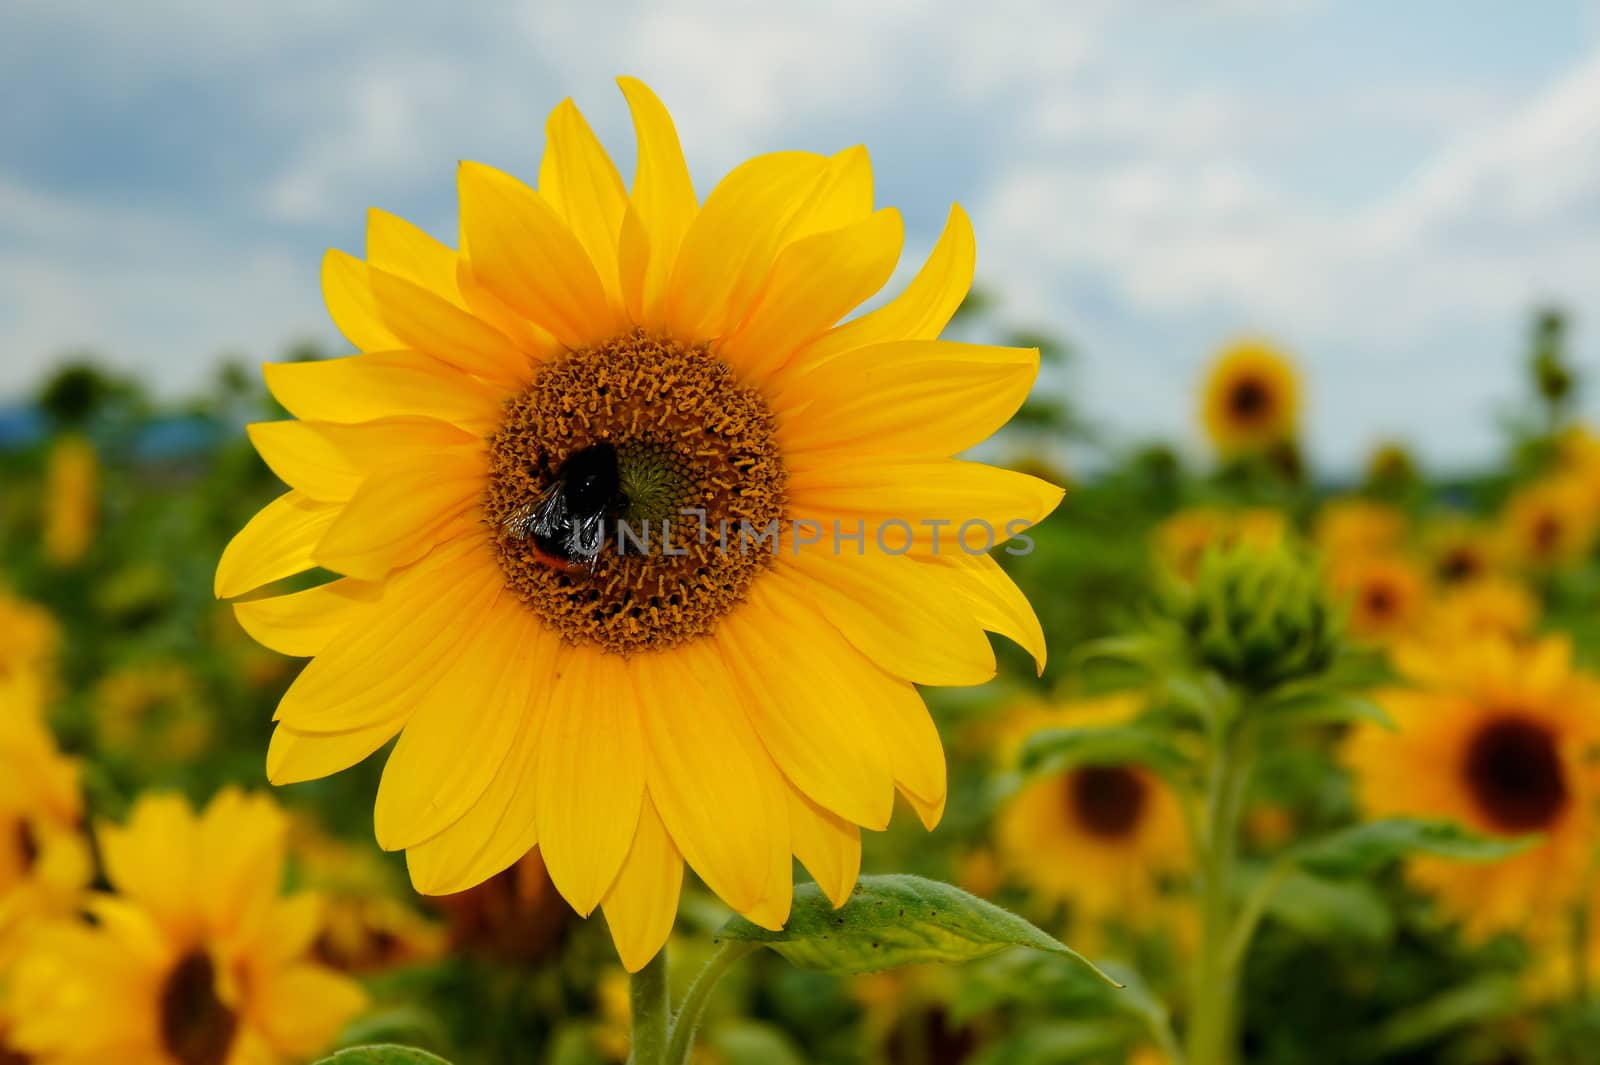 Sunflower in a whole sunflower field